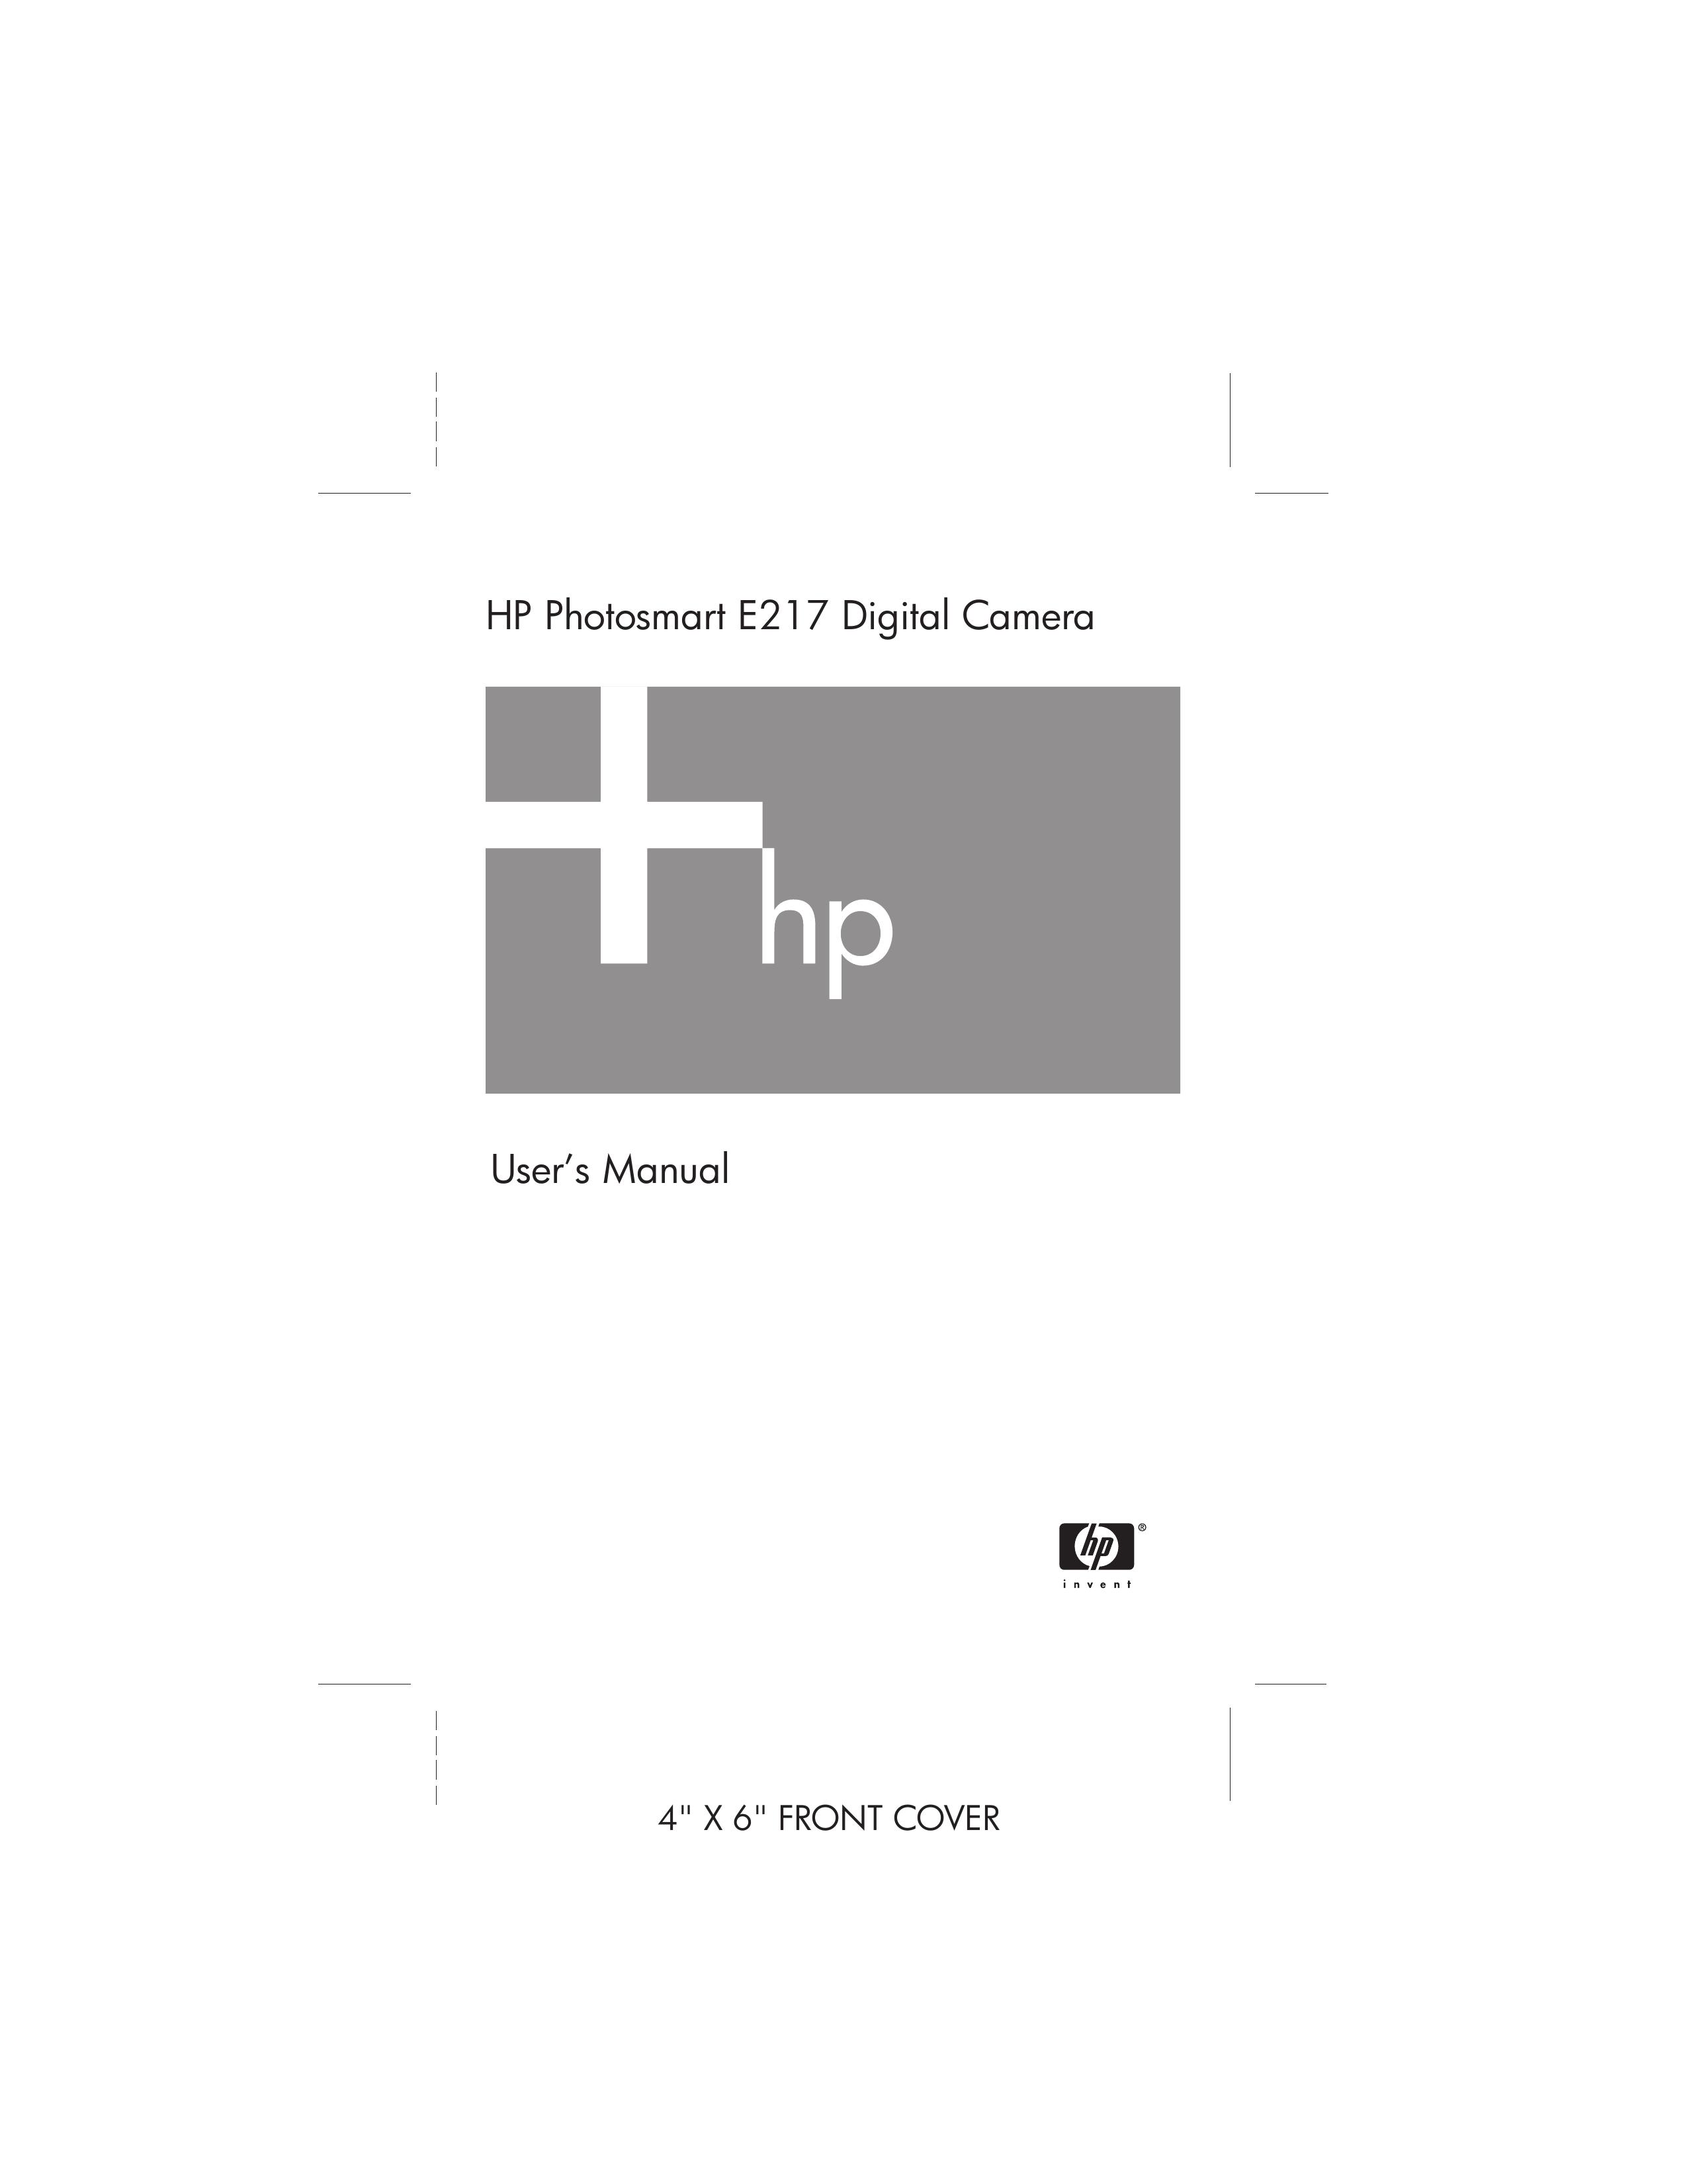 HP (Hewlett-Packard) E217 Digital Camera User Manual